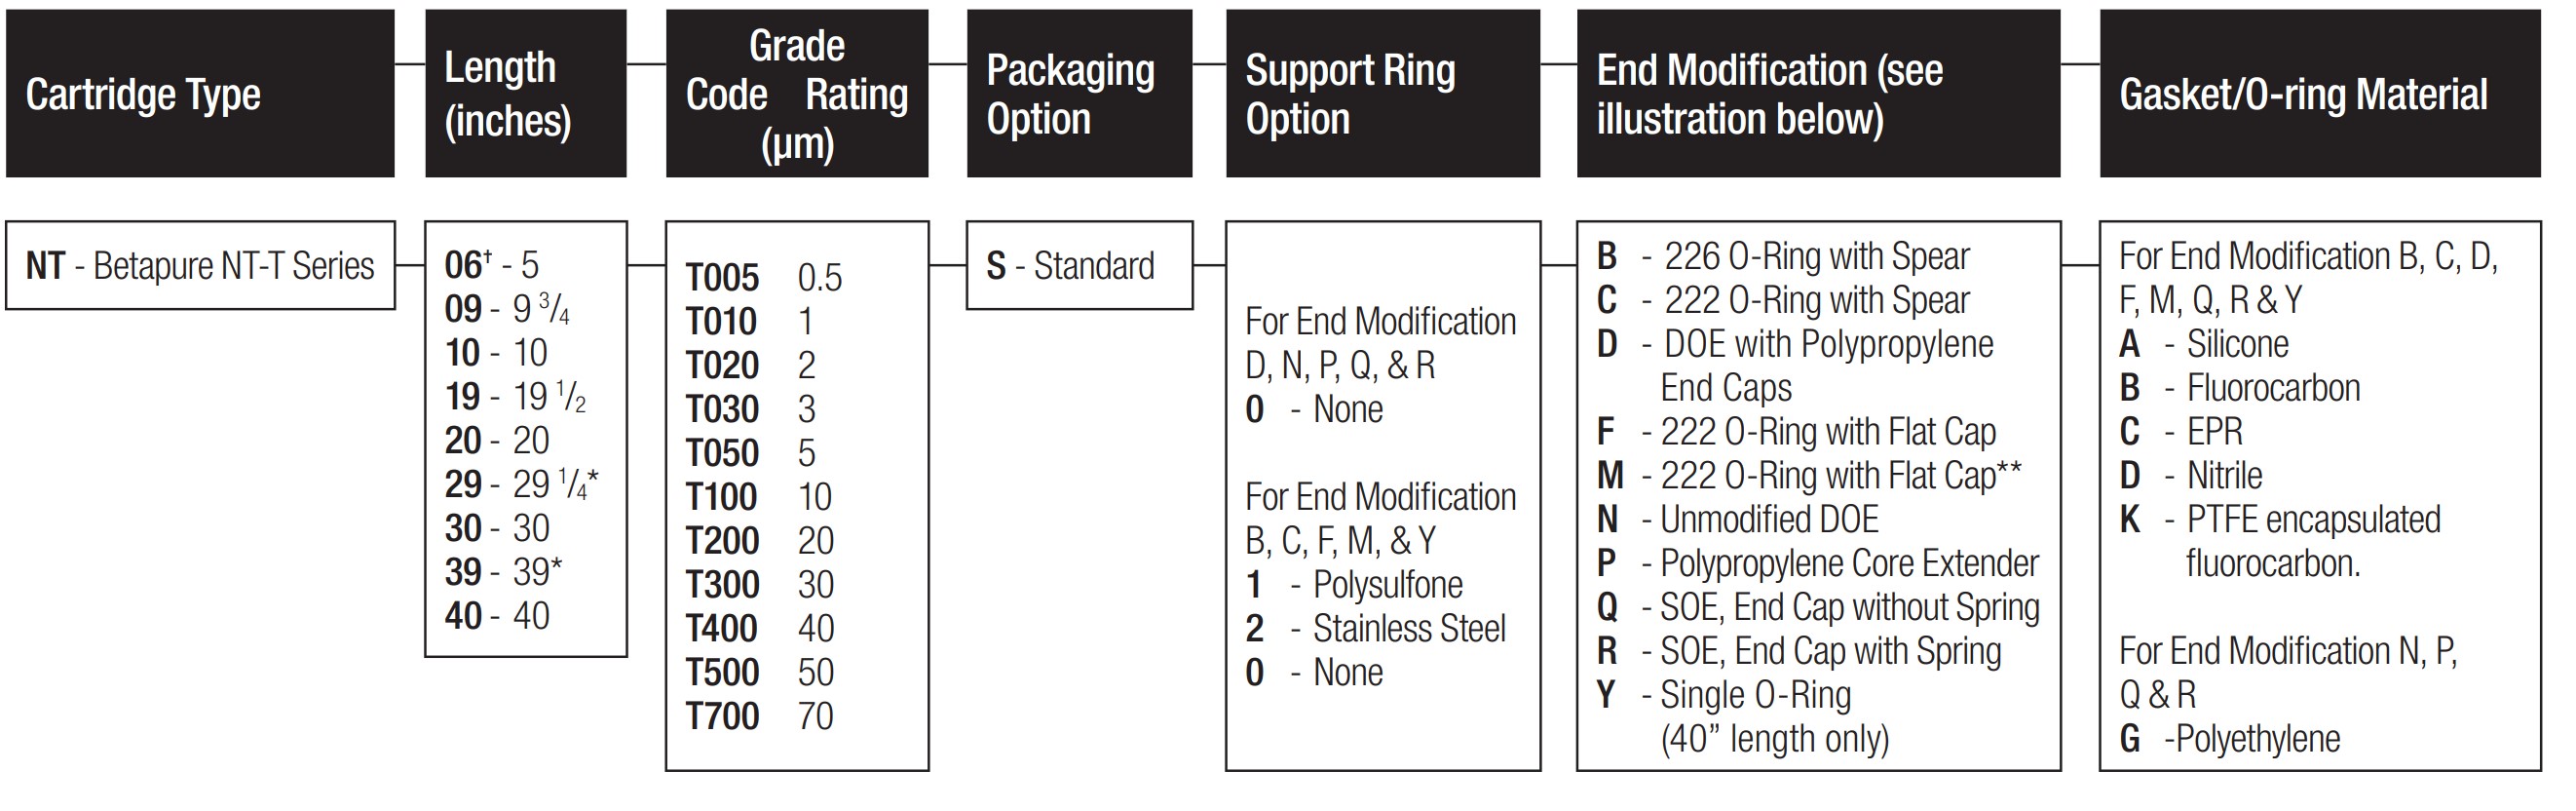 3M Betapure NT-T Cartridge Ordering Guide